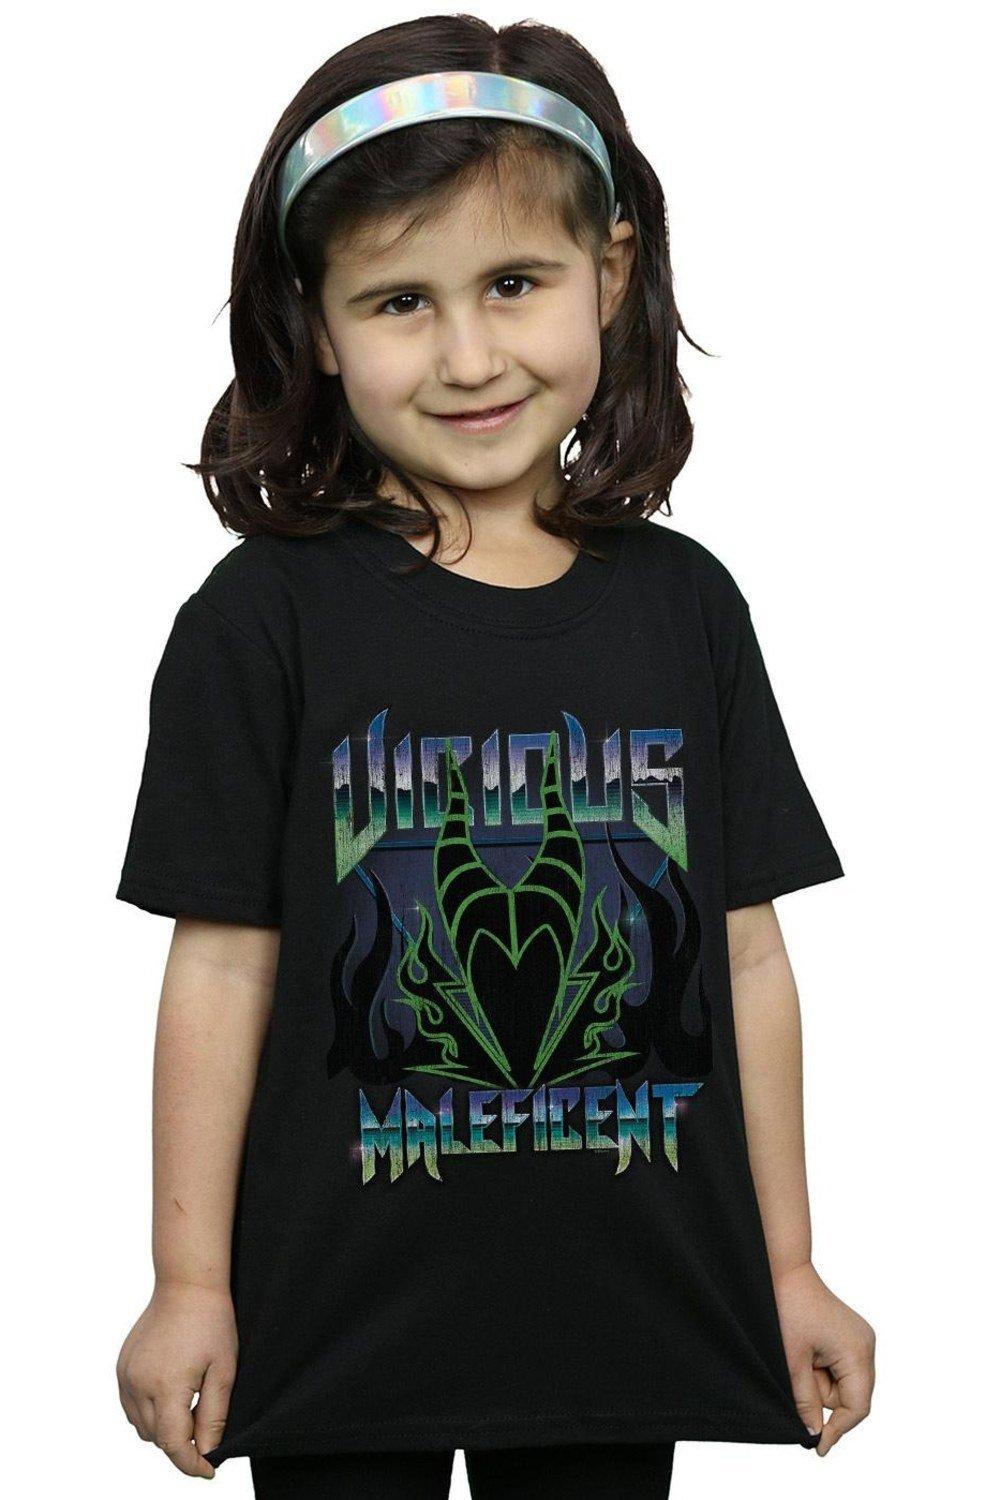 Vicious Maleficent Cotton T-Shirt